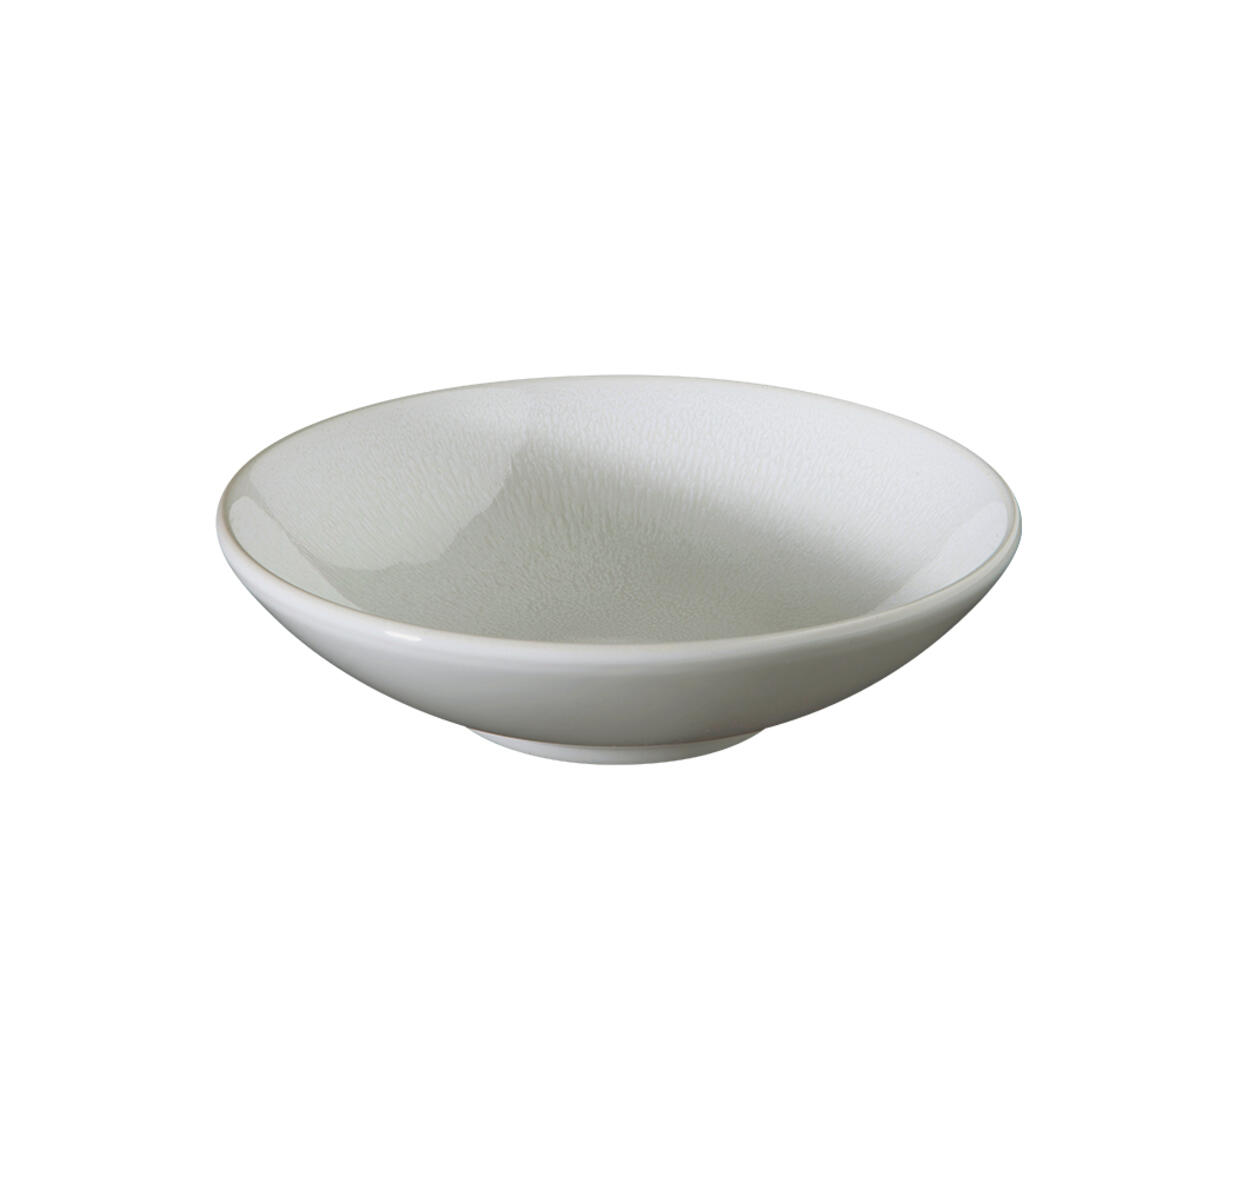 soup plate tourron neige ceramic manufacturer